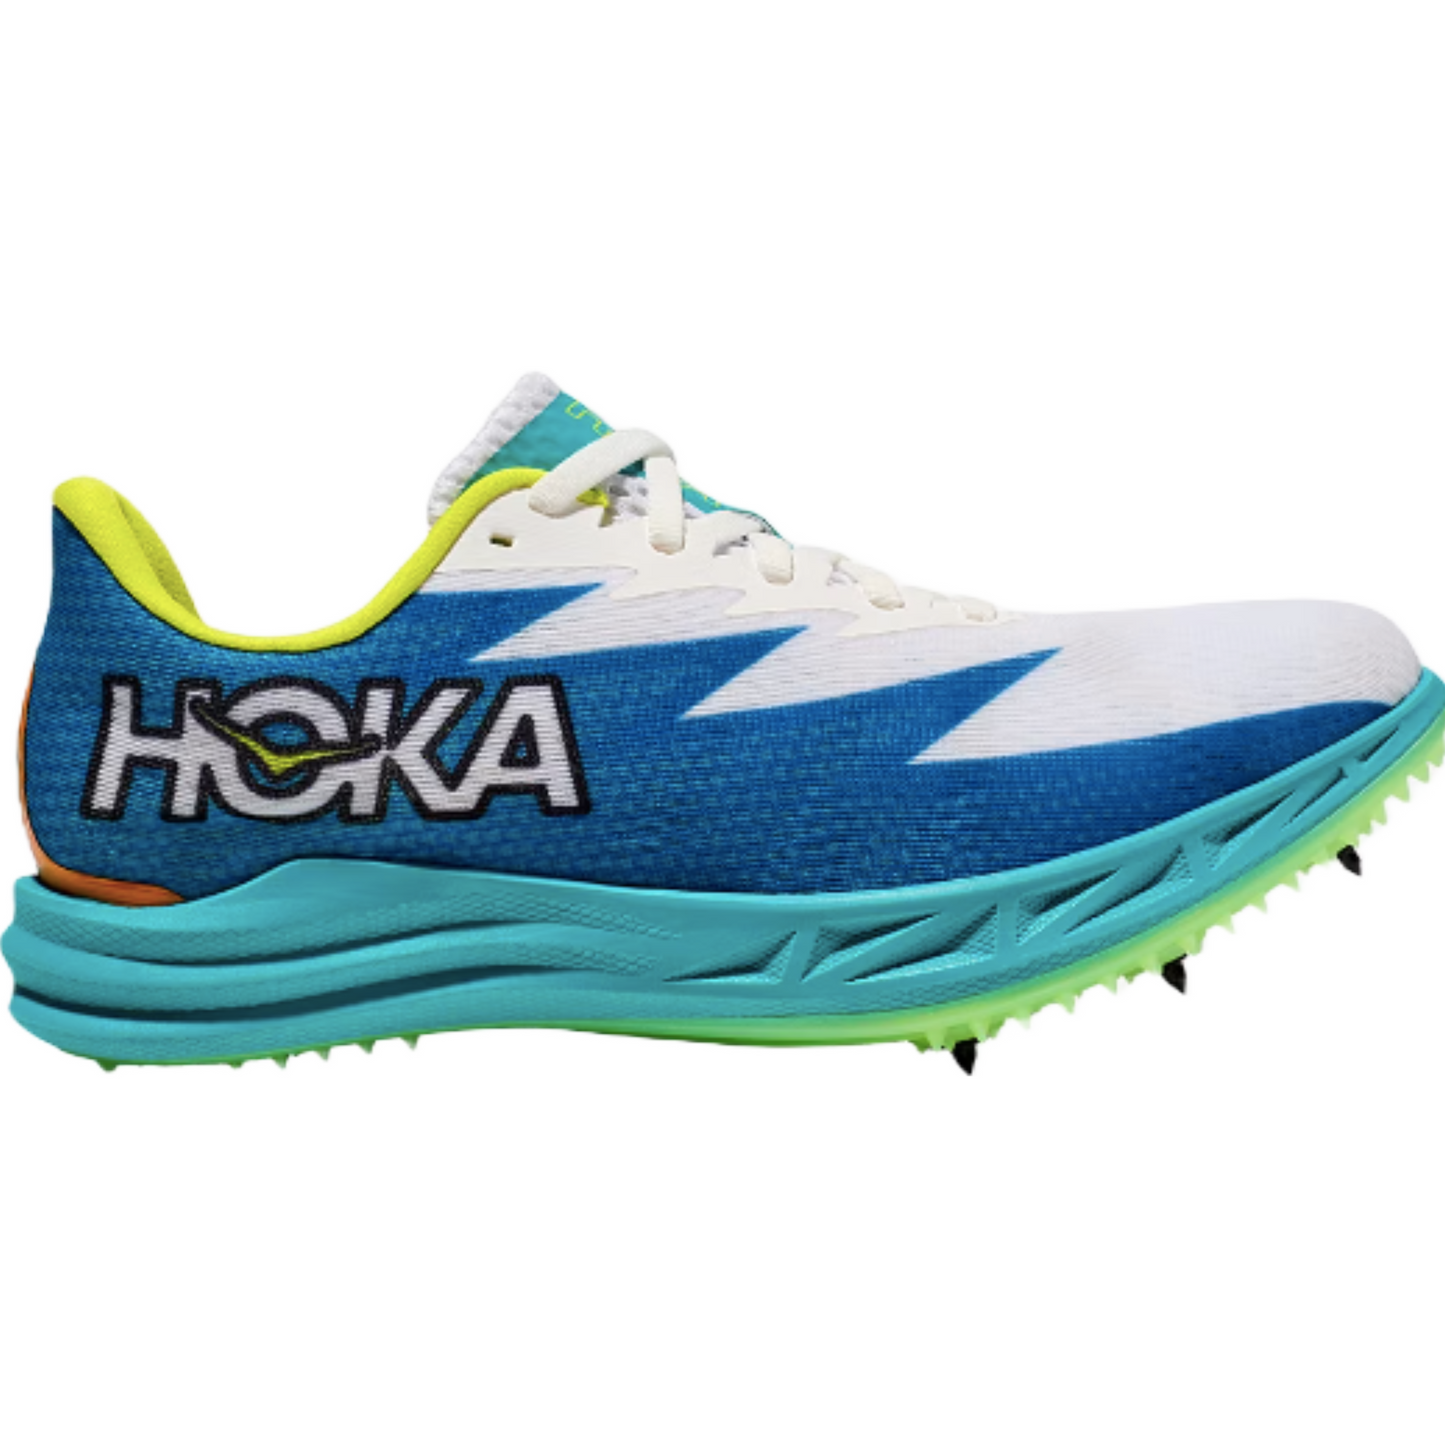 Hoka Unisex Crescendo MD Track Spikes in Blue and White